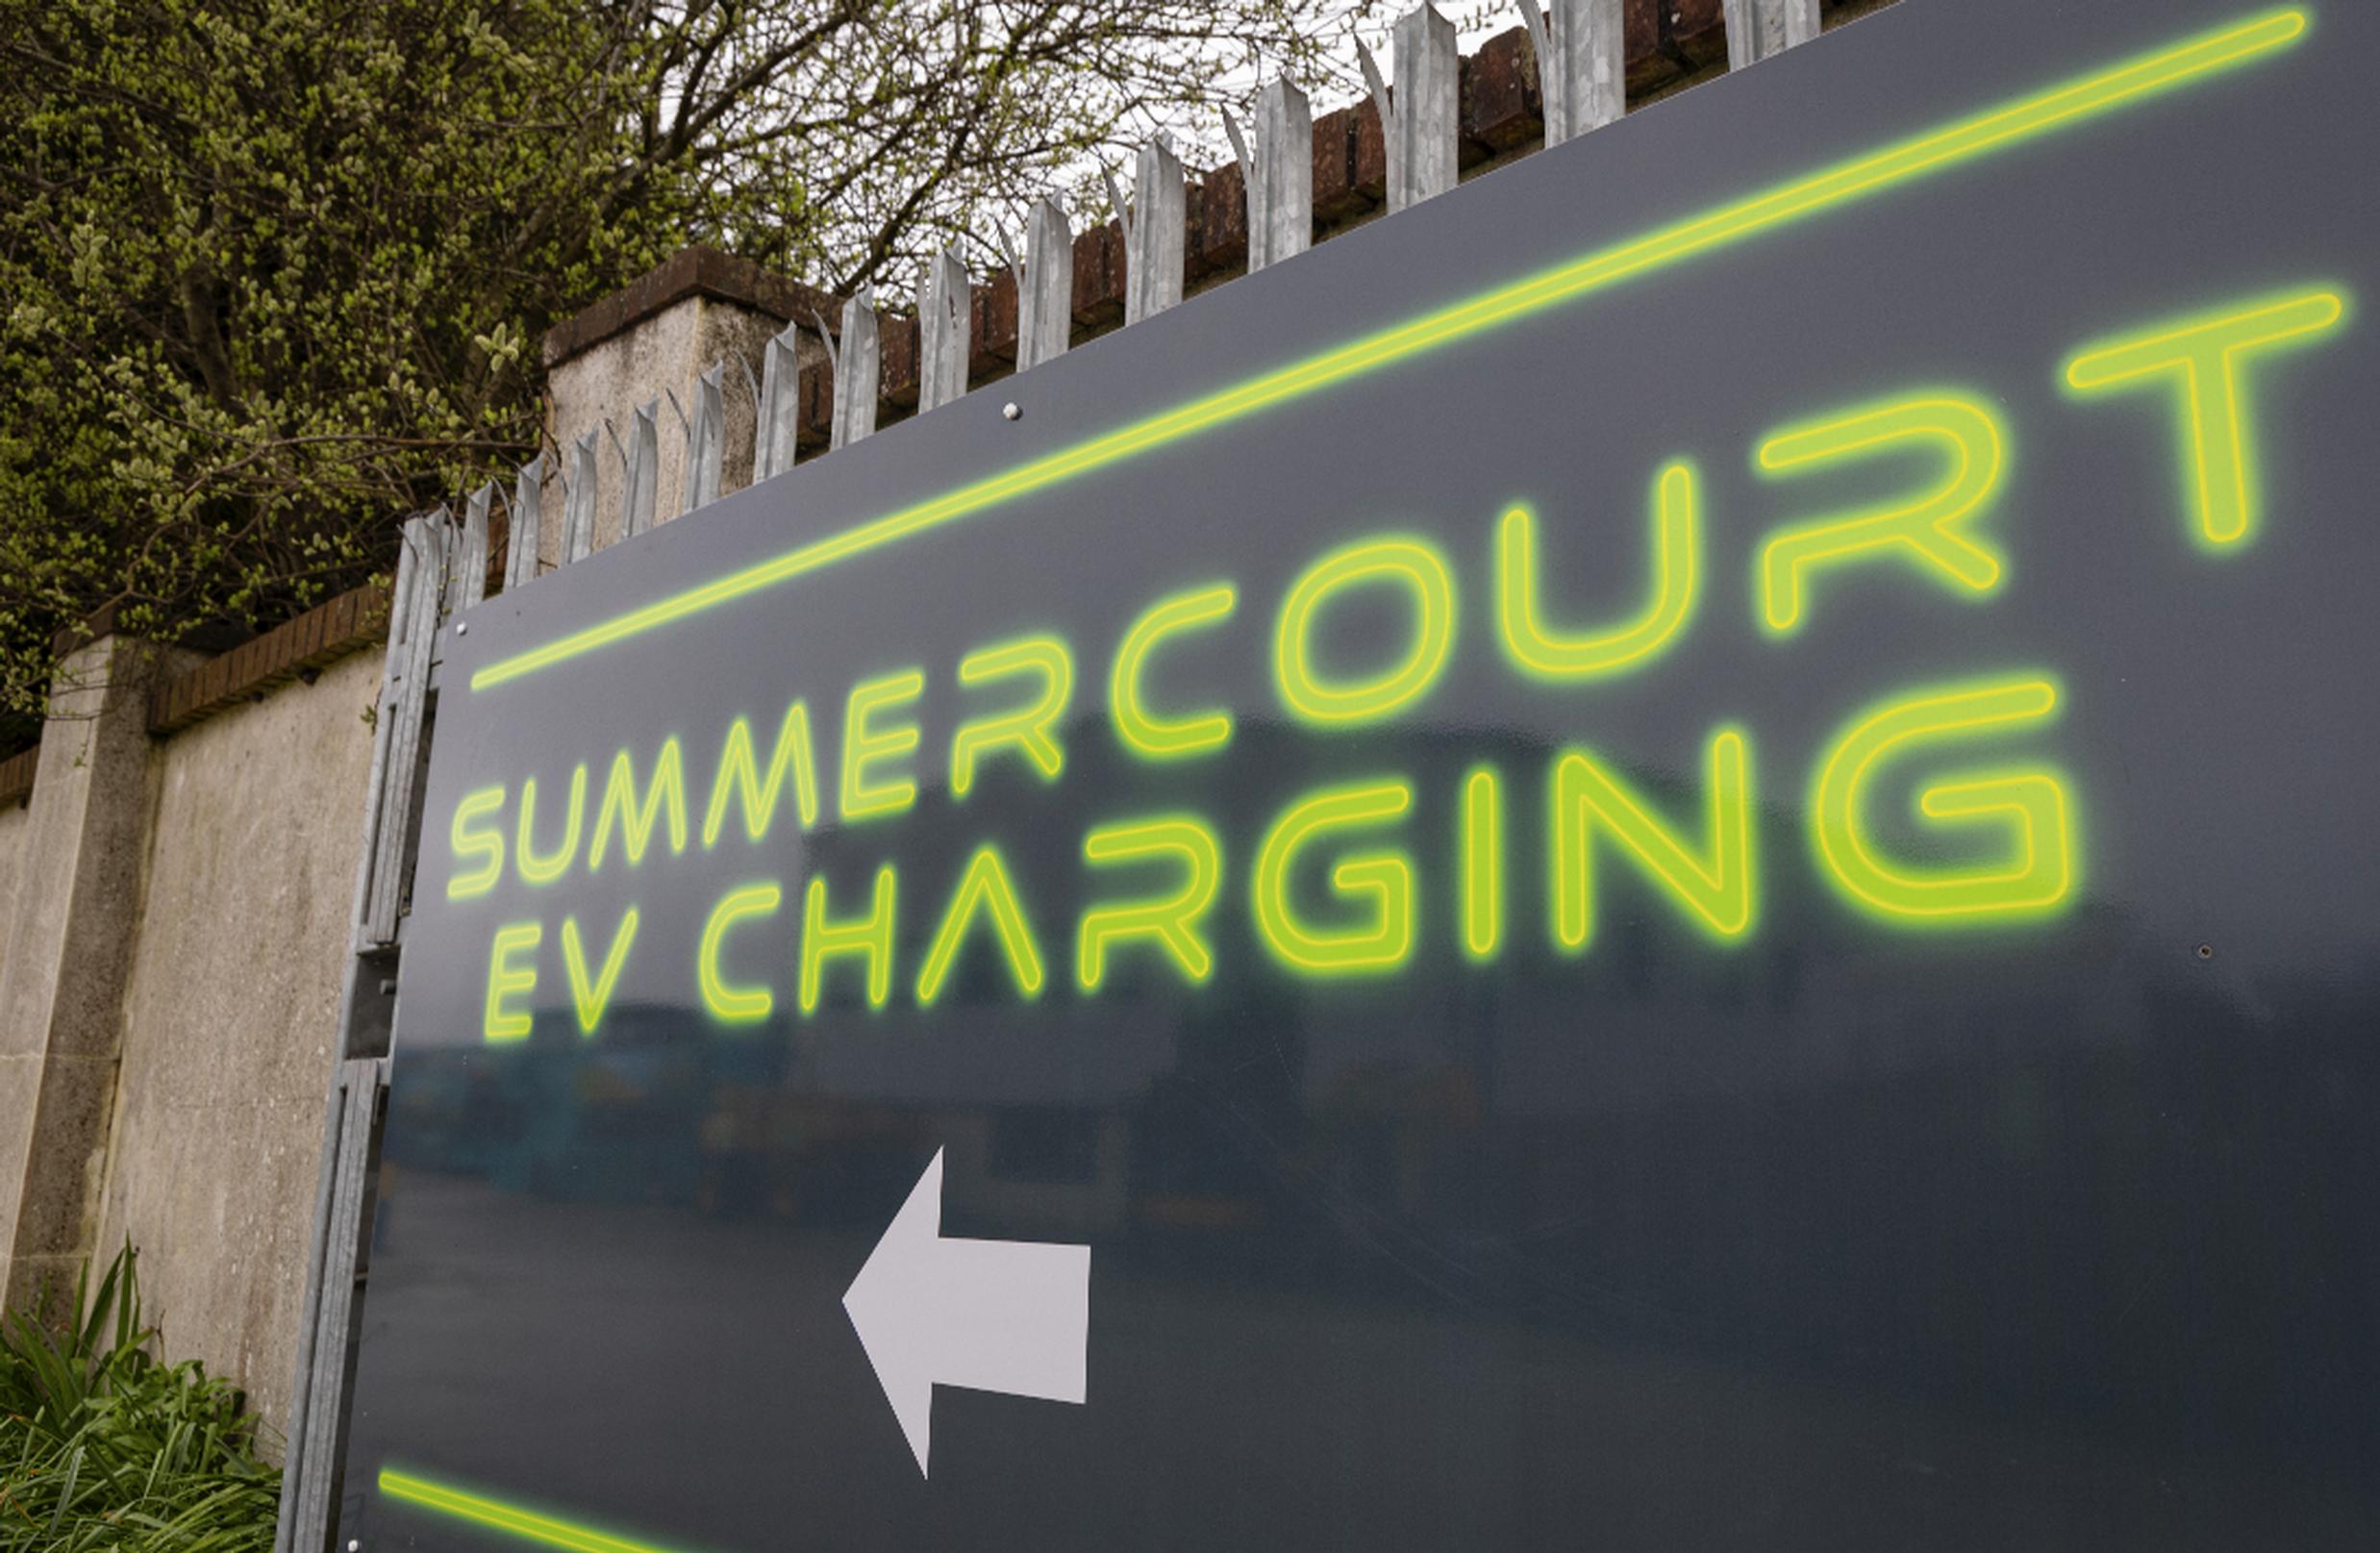 The Summercourt charging hub